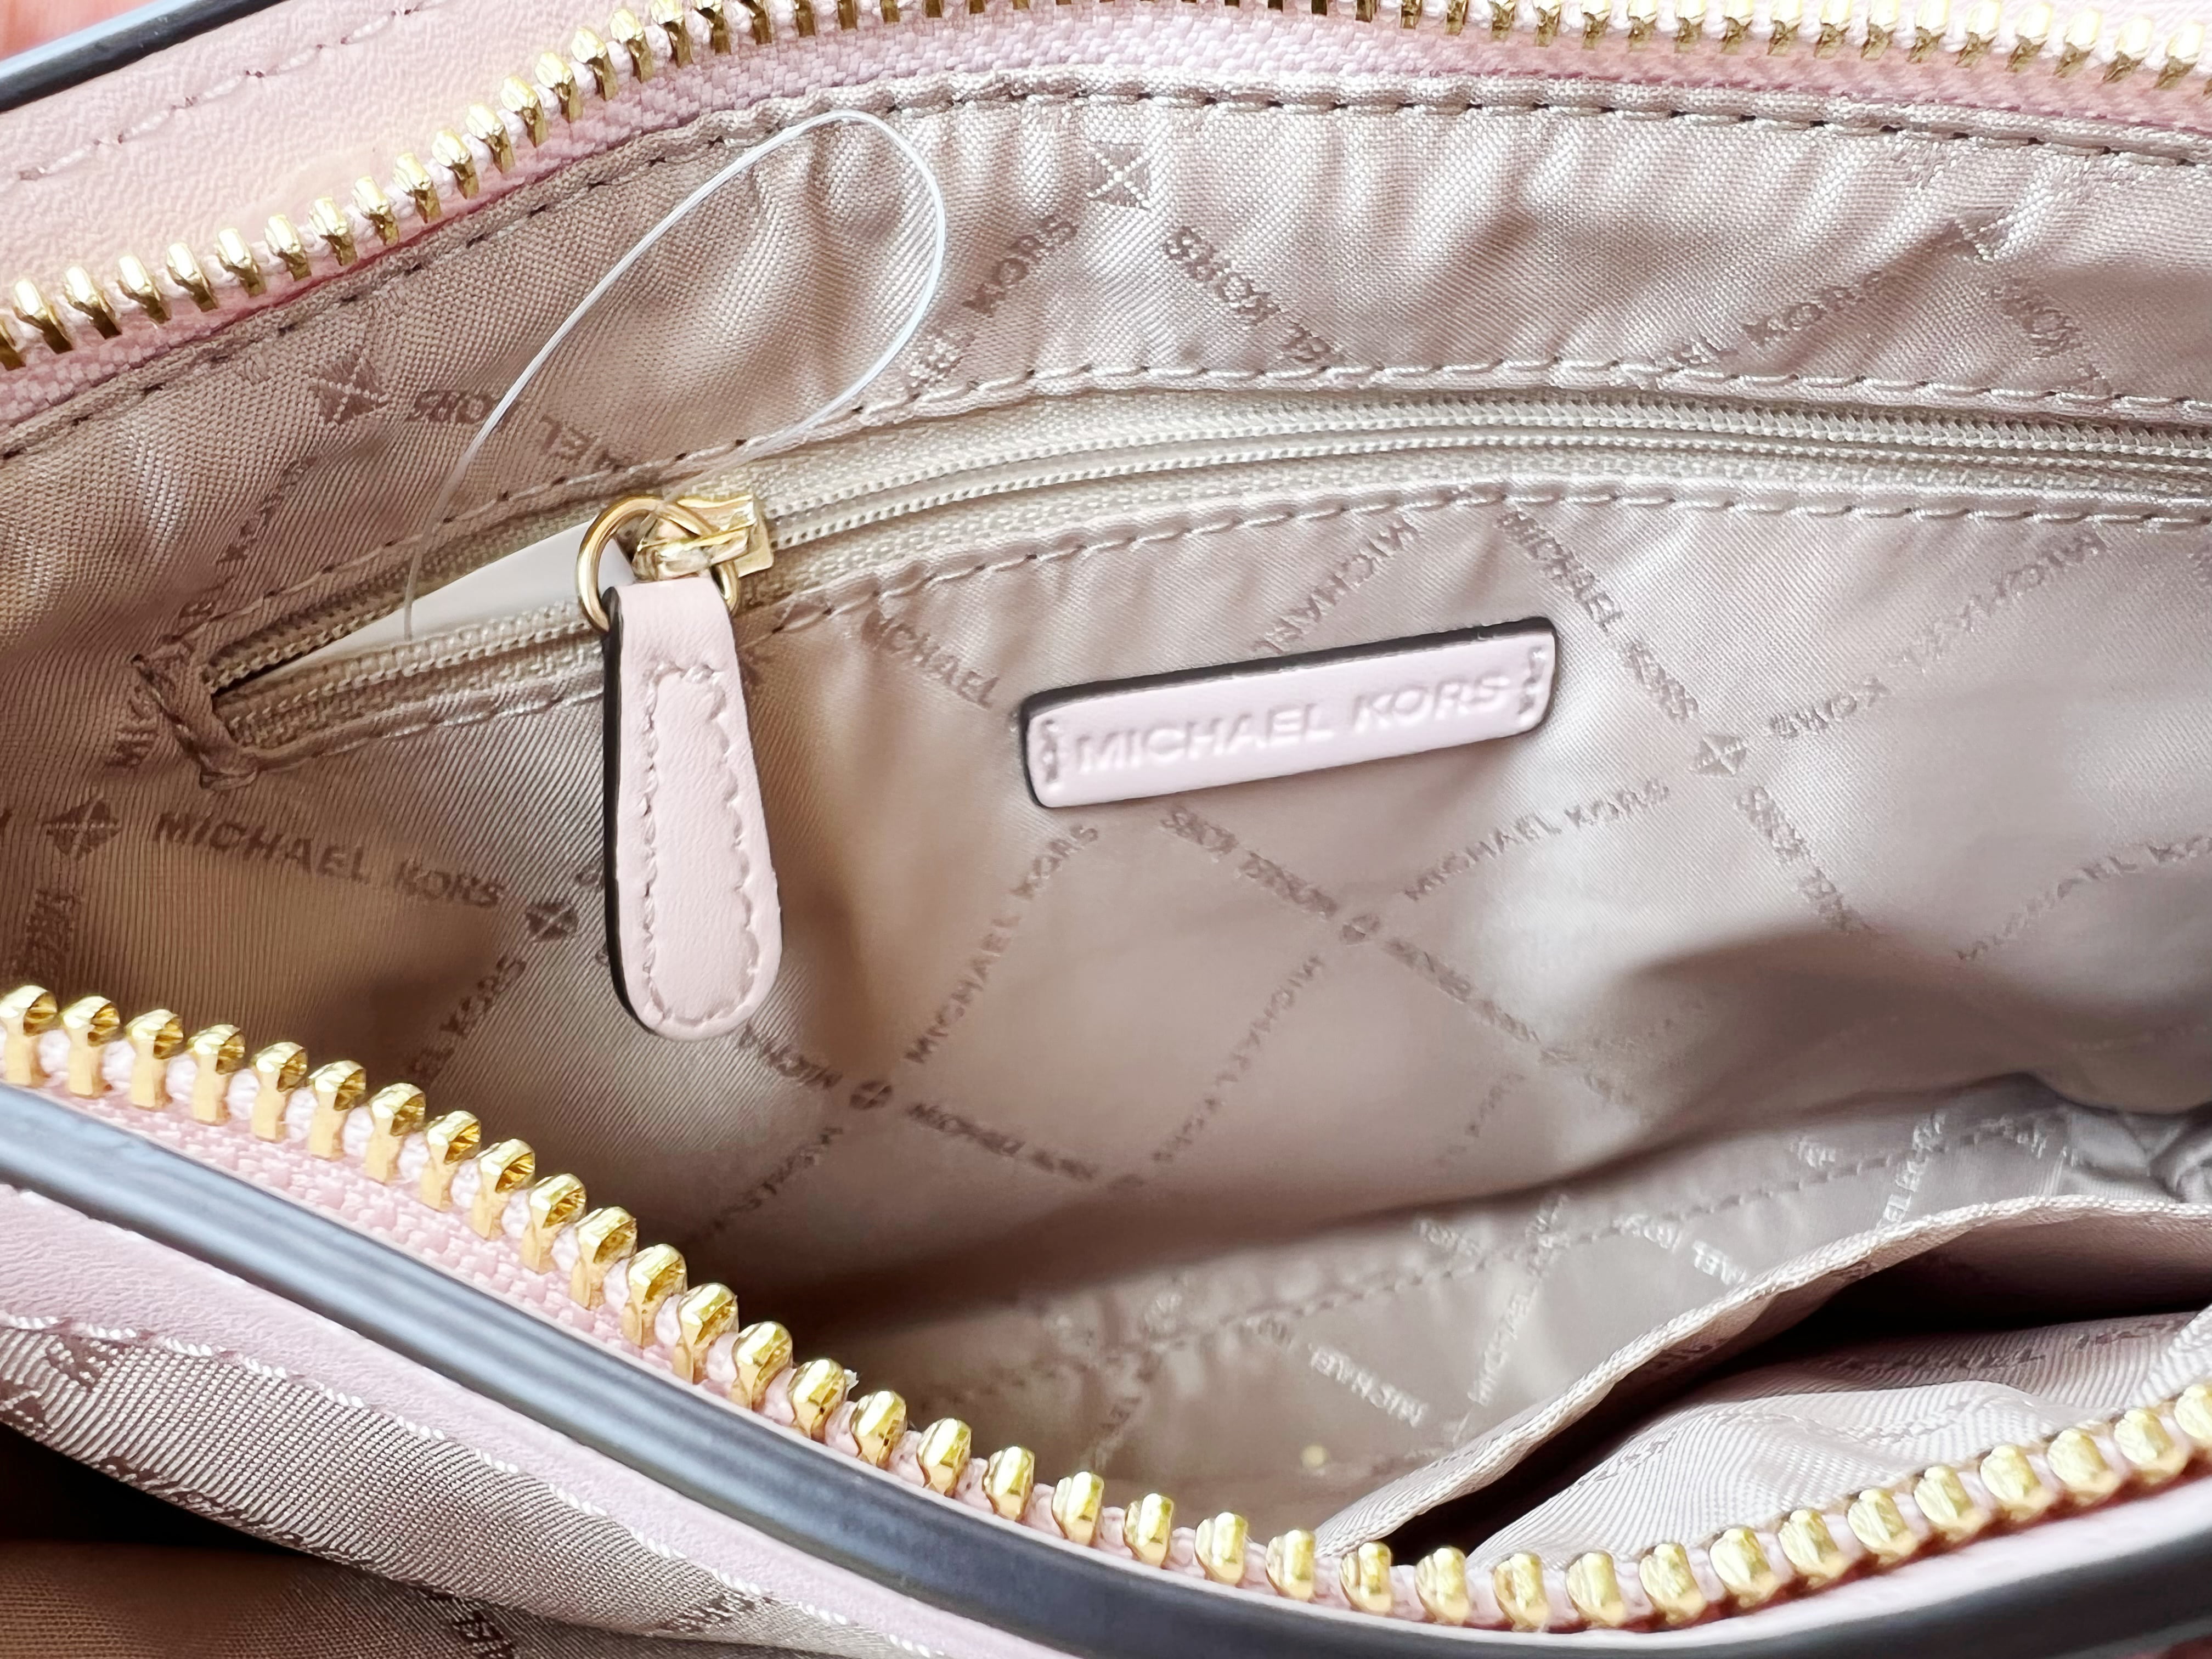 Michael Kors Trisha Medium Triple Compartment Crossbody Bag Rose Pink  Leather: Handbags